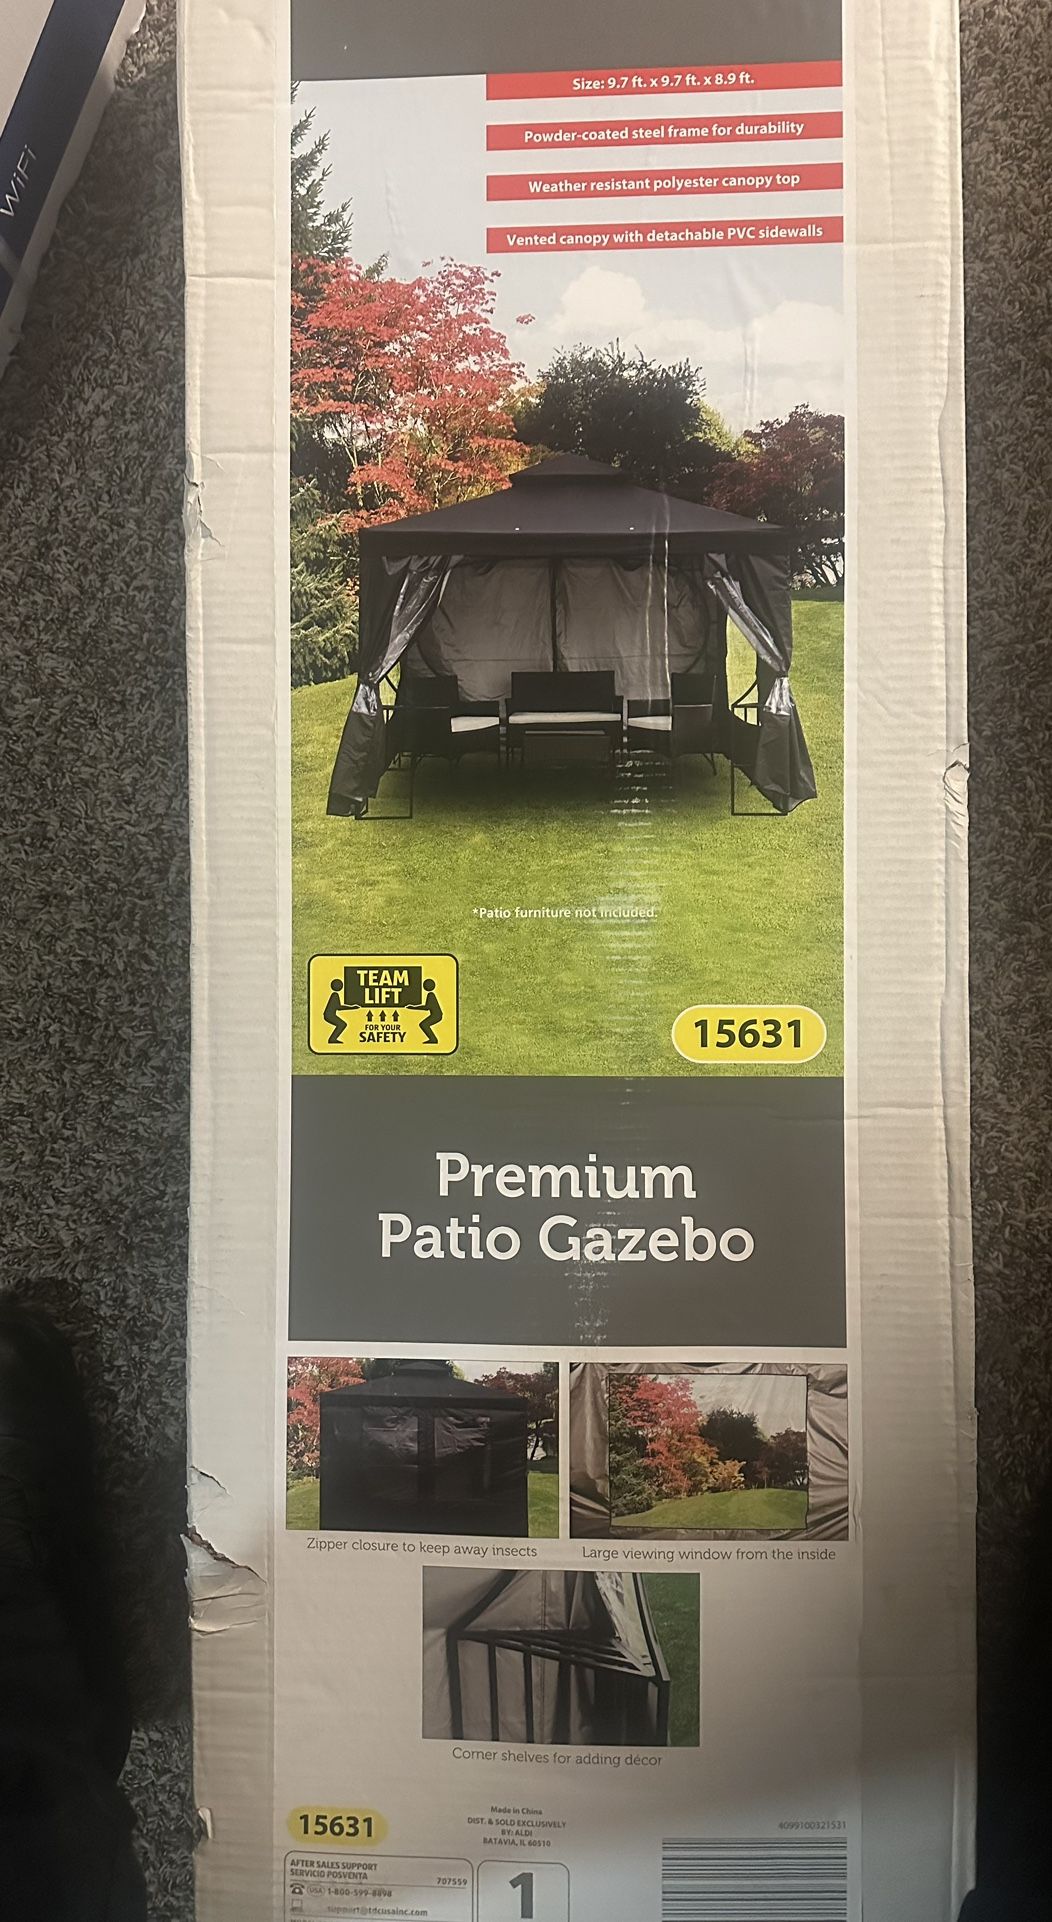 Premium Patio Gazebo